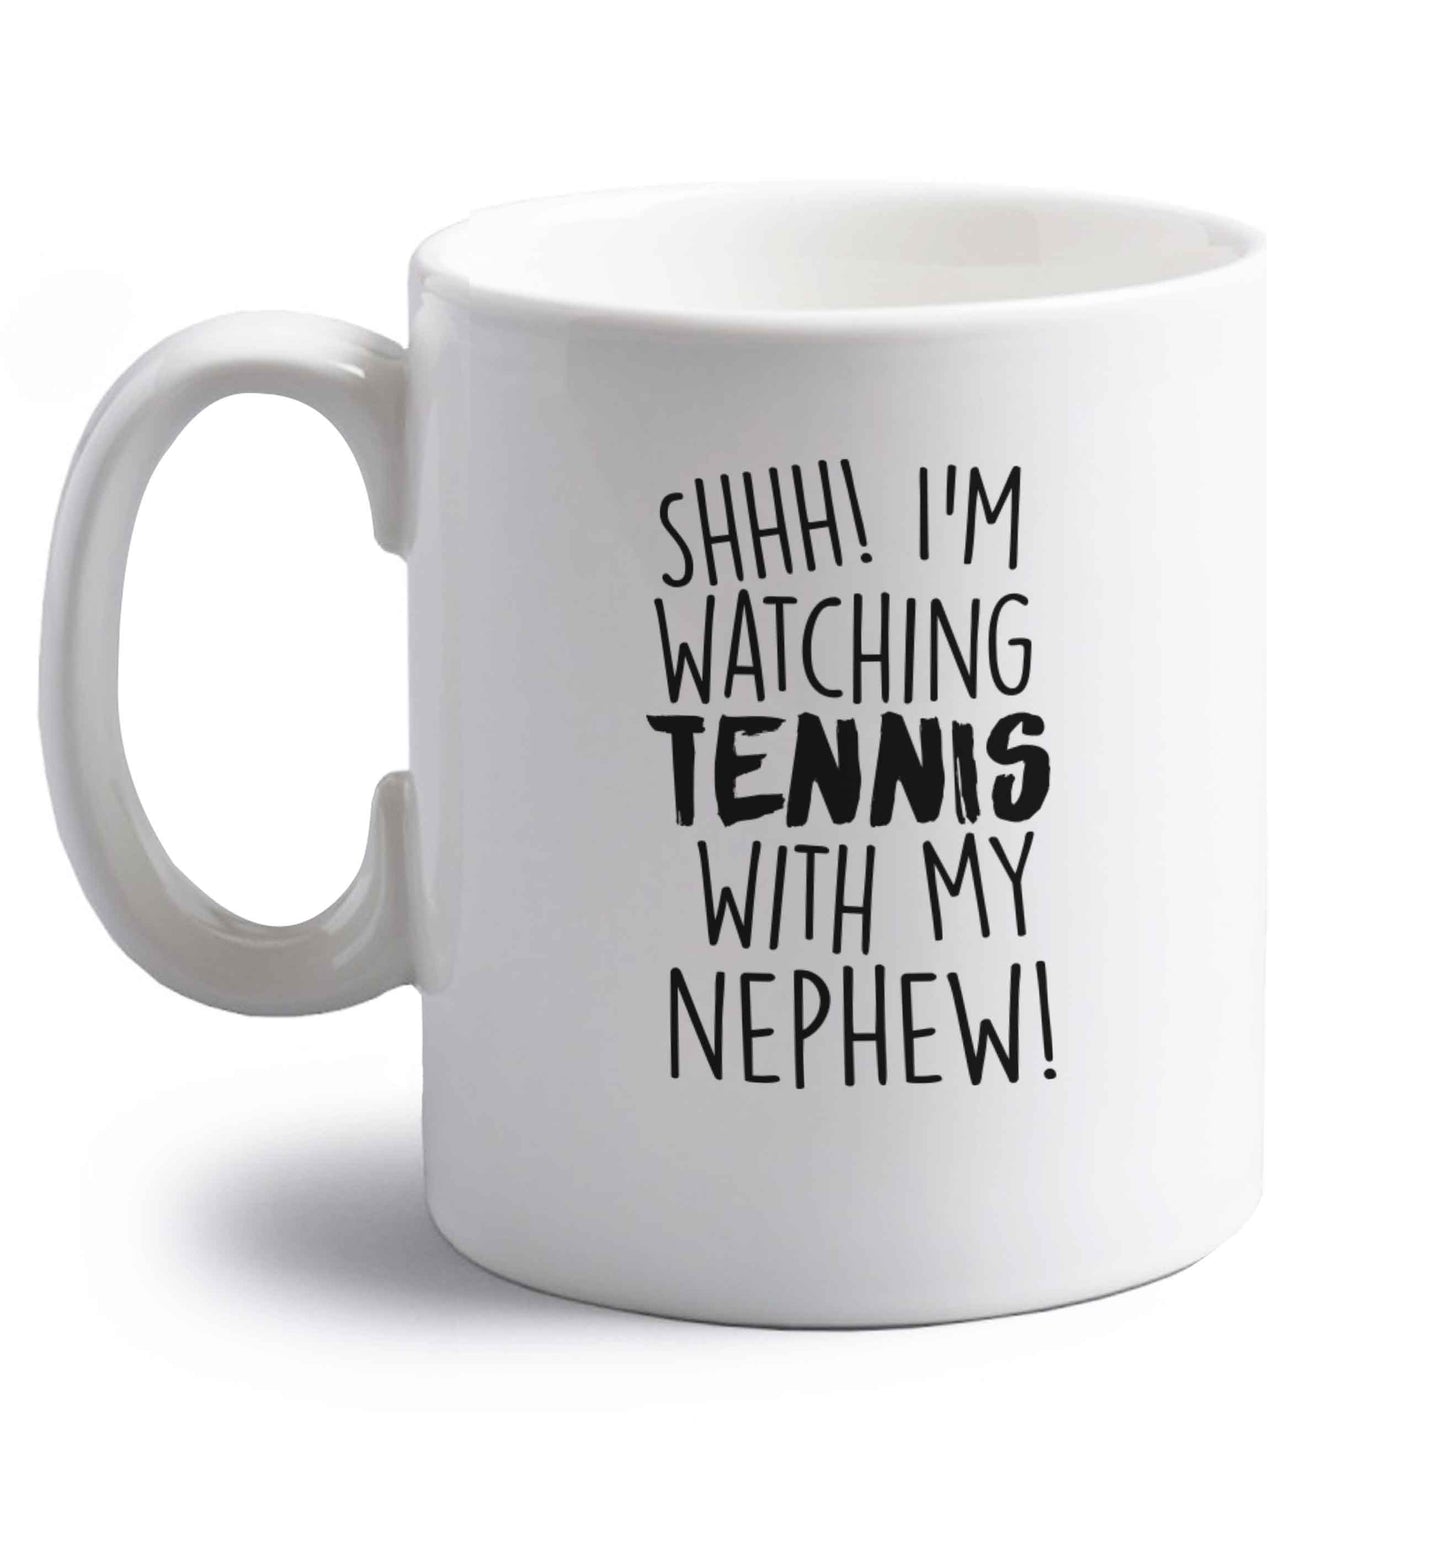 Shh! I'm watching tennis with my nephew! right handed white ceramic mug 